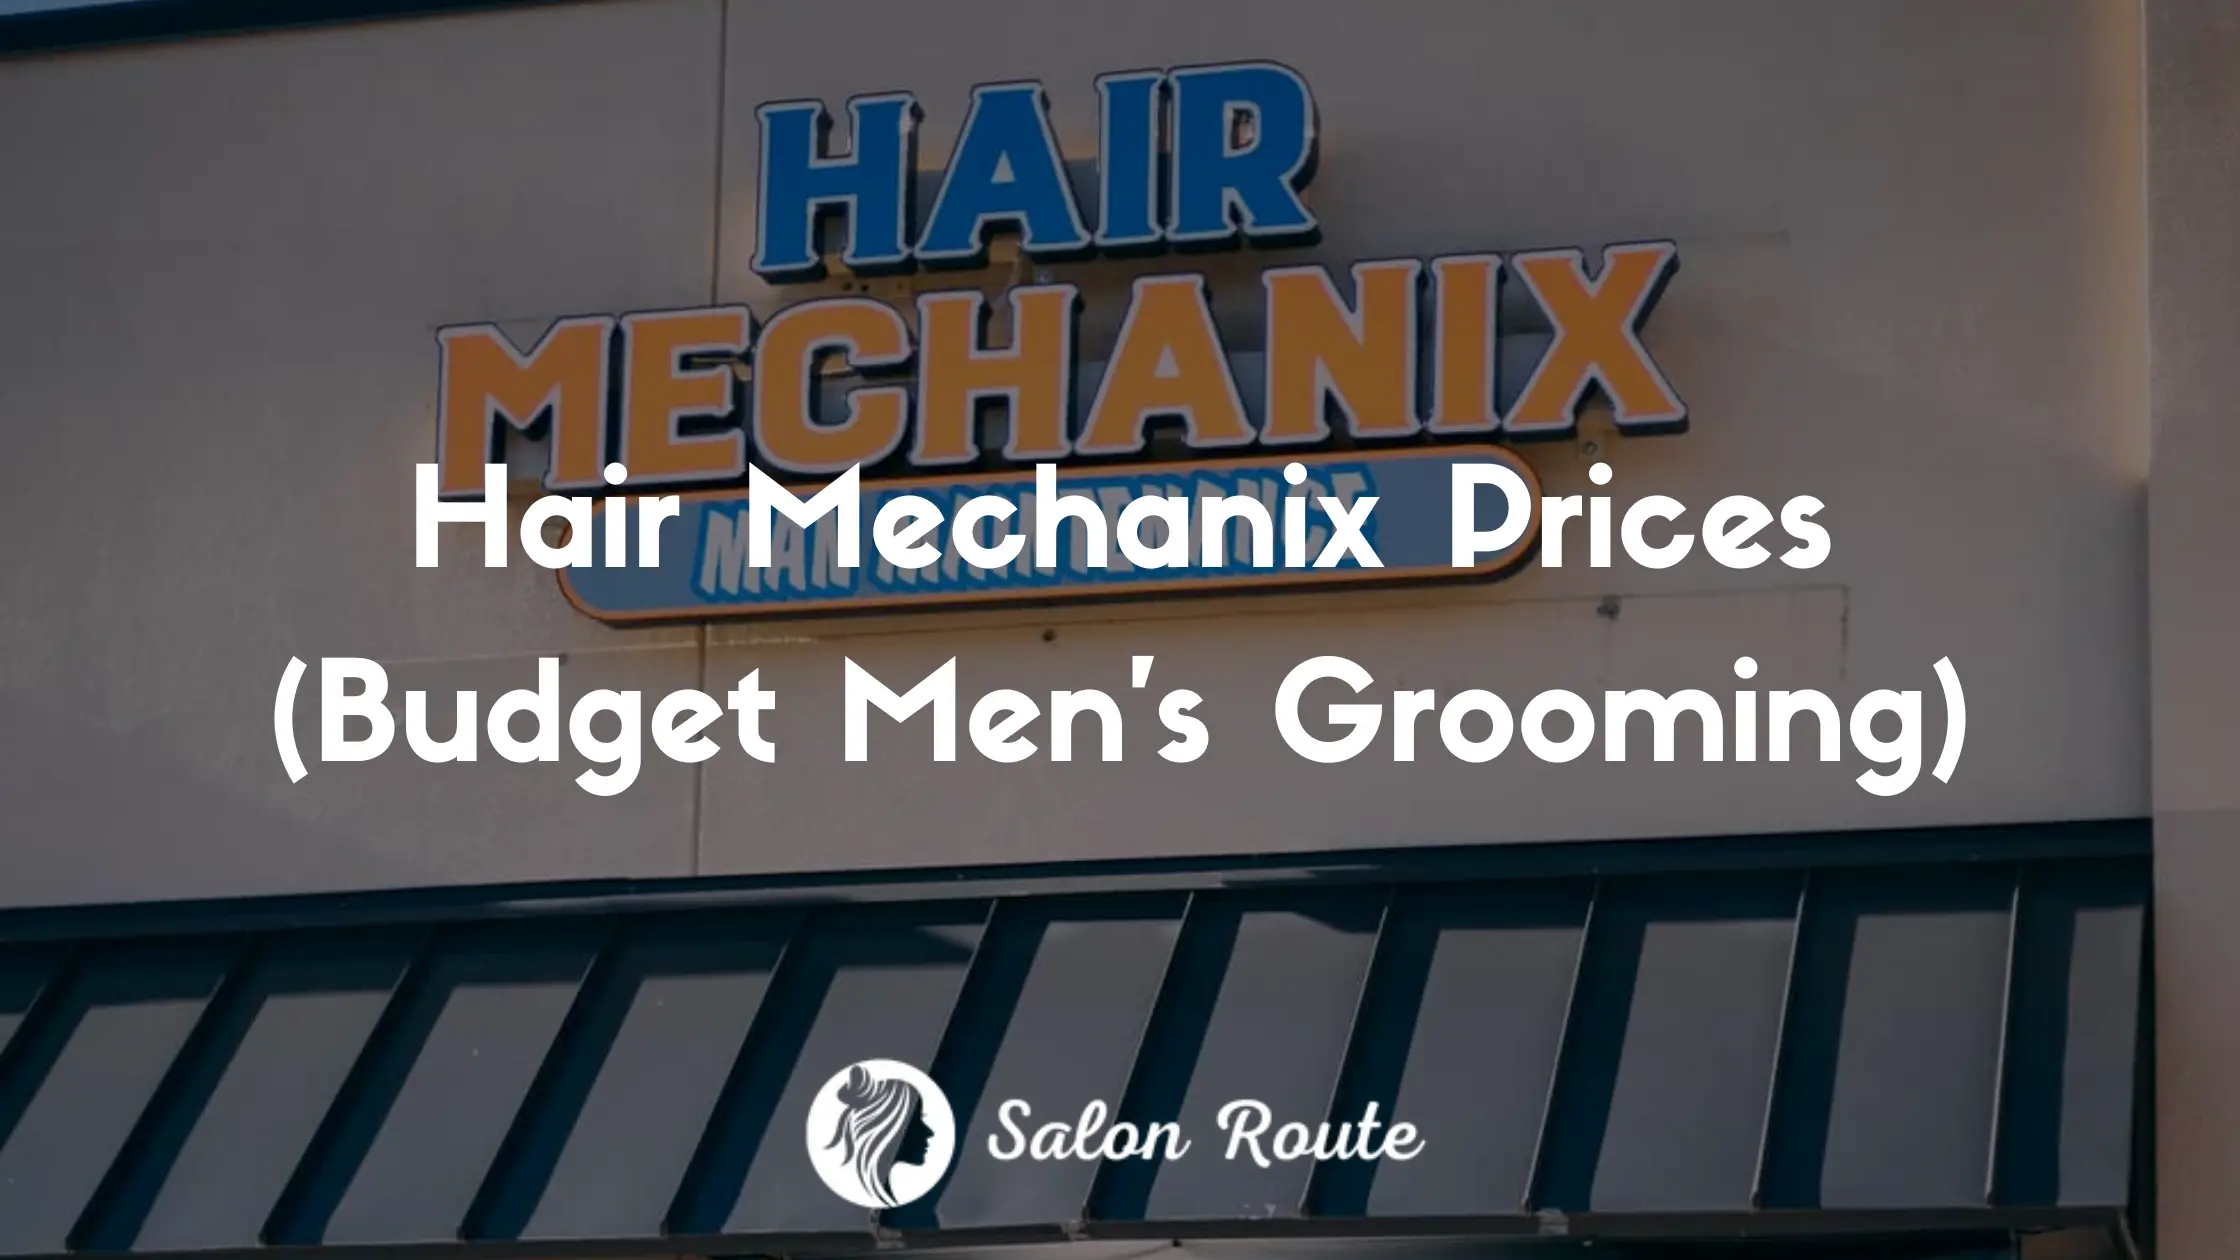 Hair Mechanix Prices (Budget Men's Grooming)